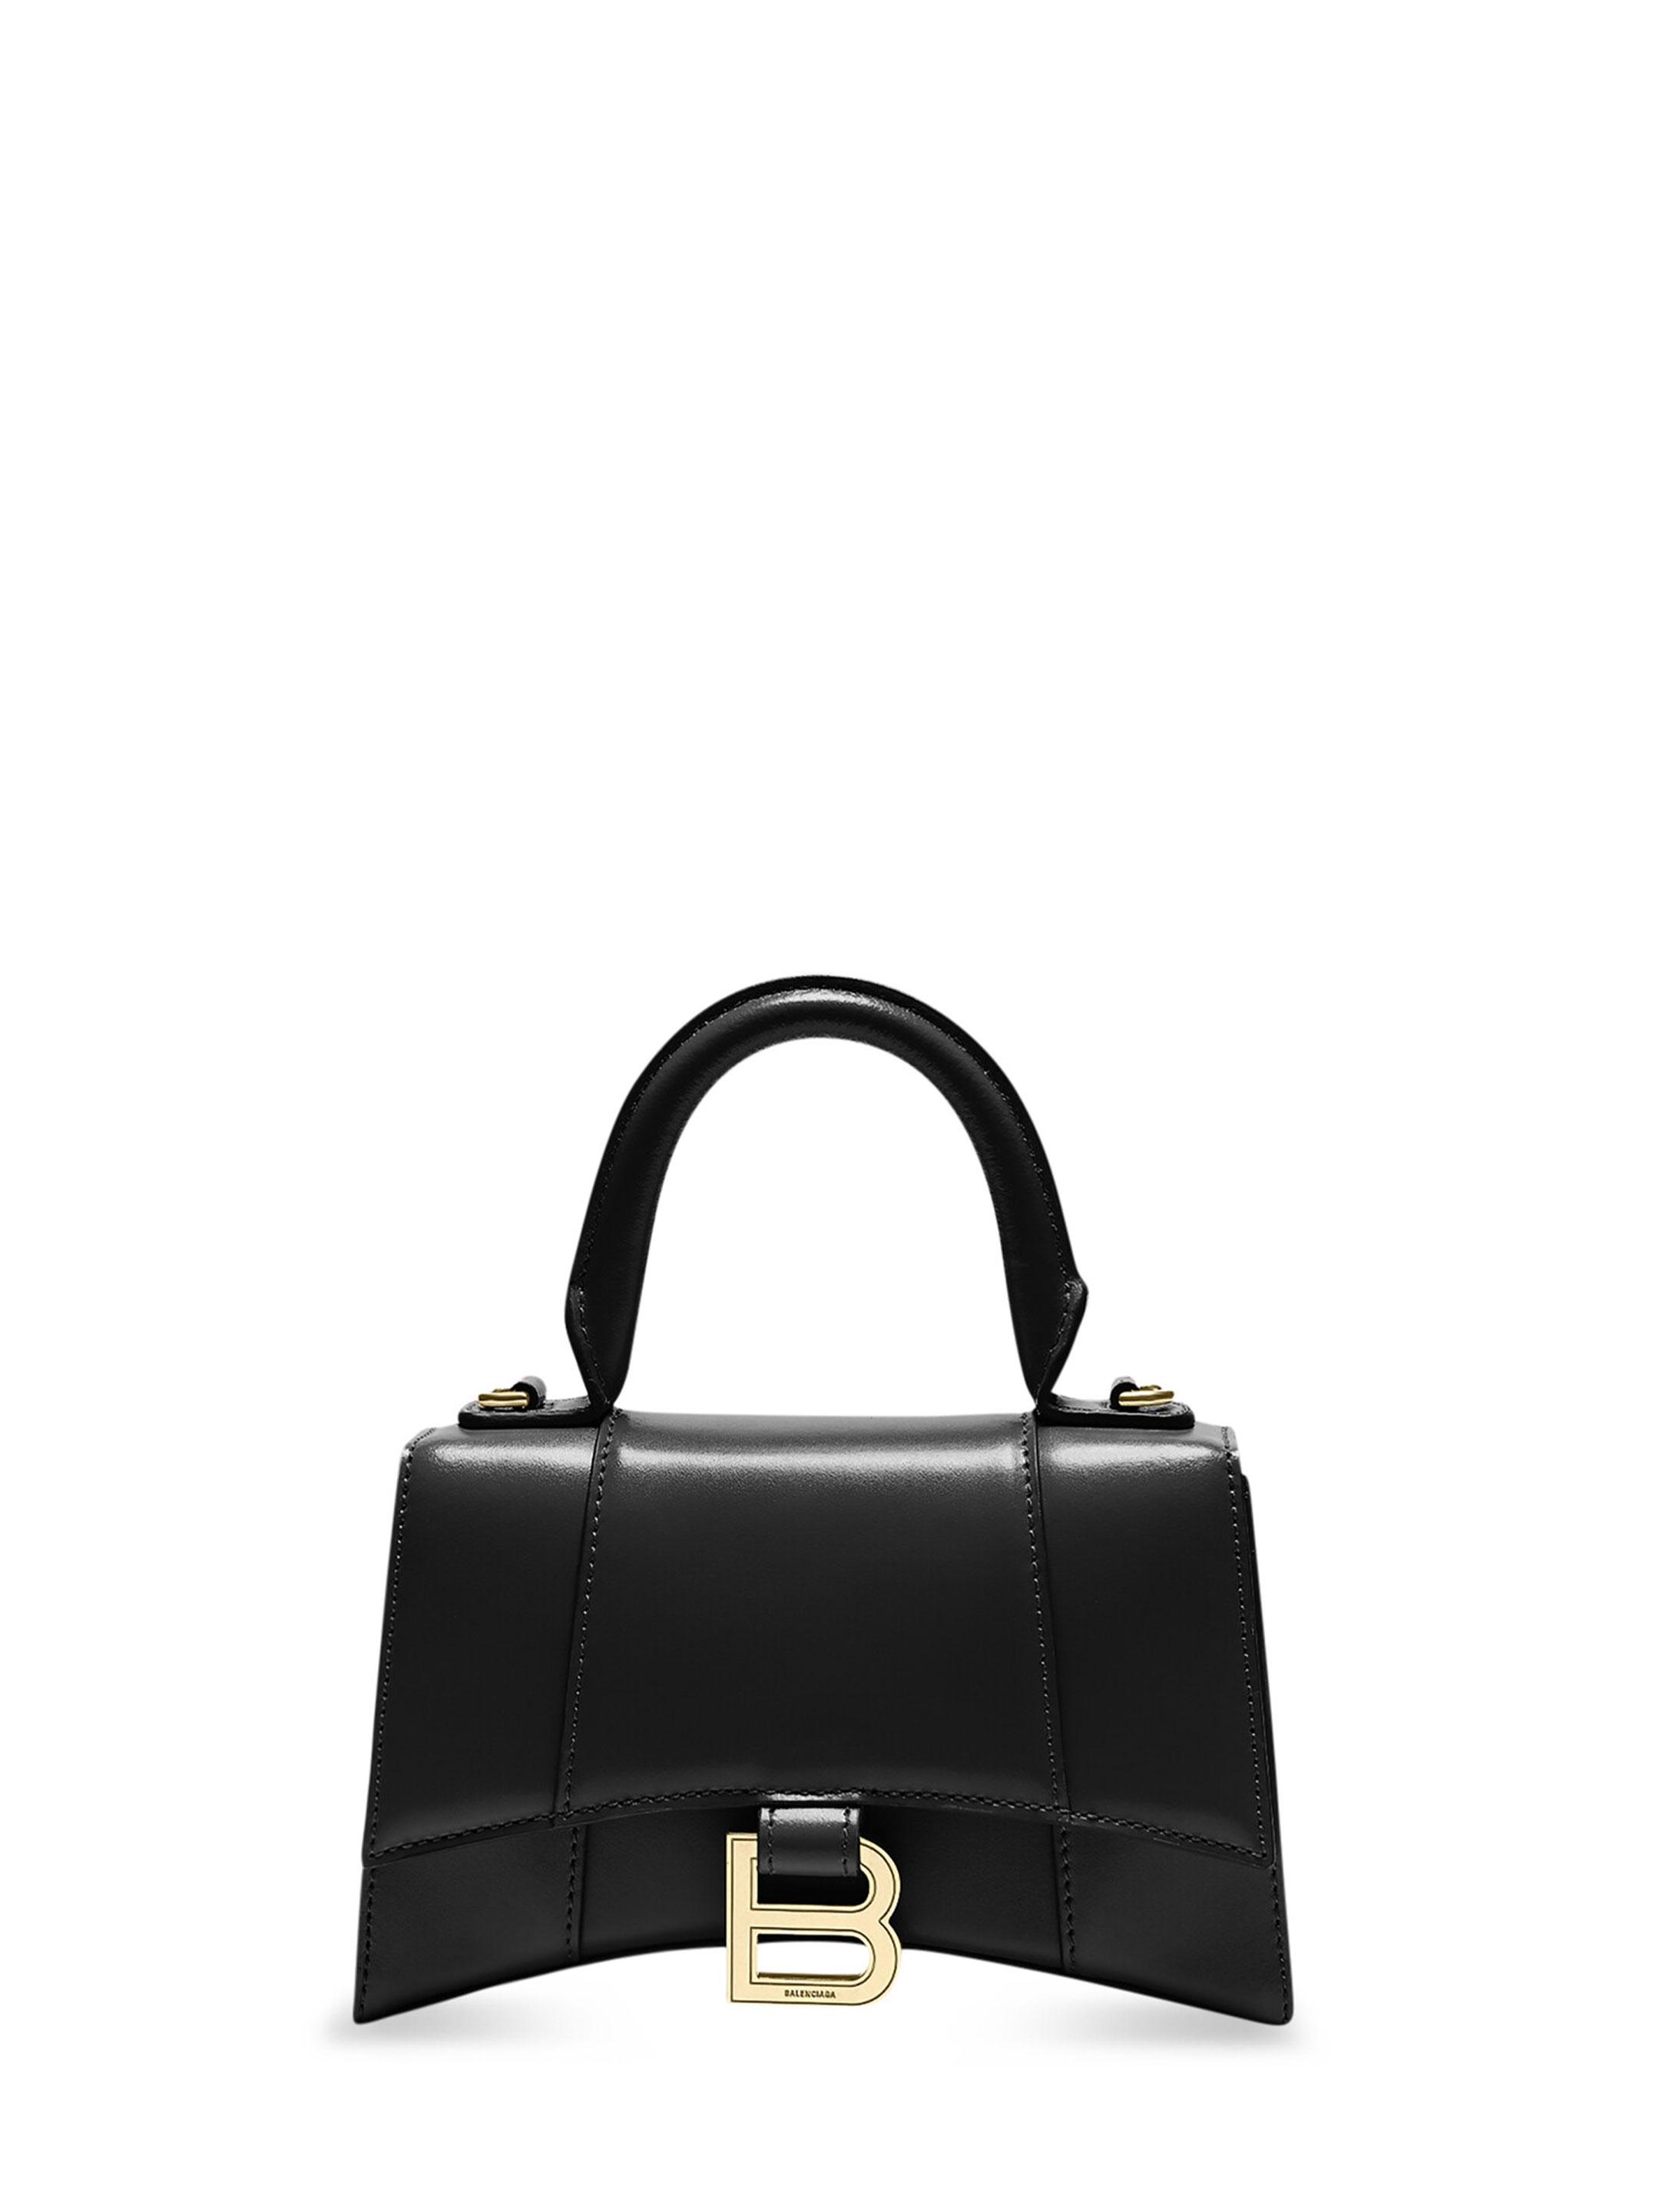 Balenciaga Hourglass Xs Top Handle Bag in Black | Lyst